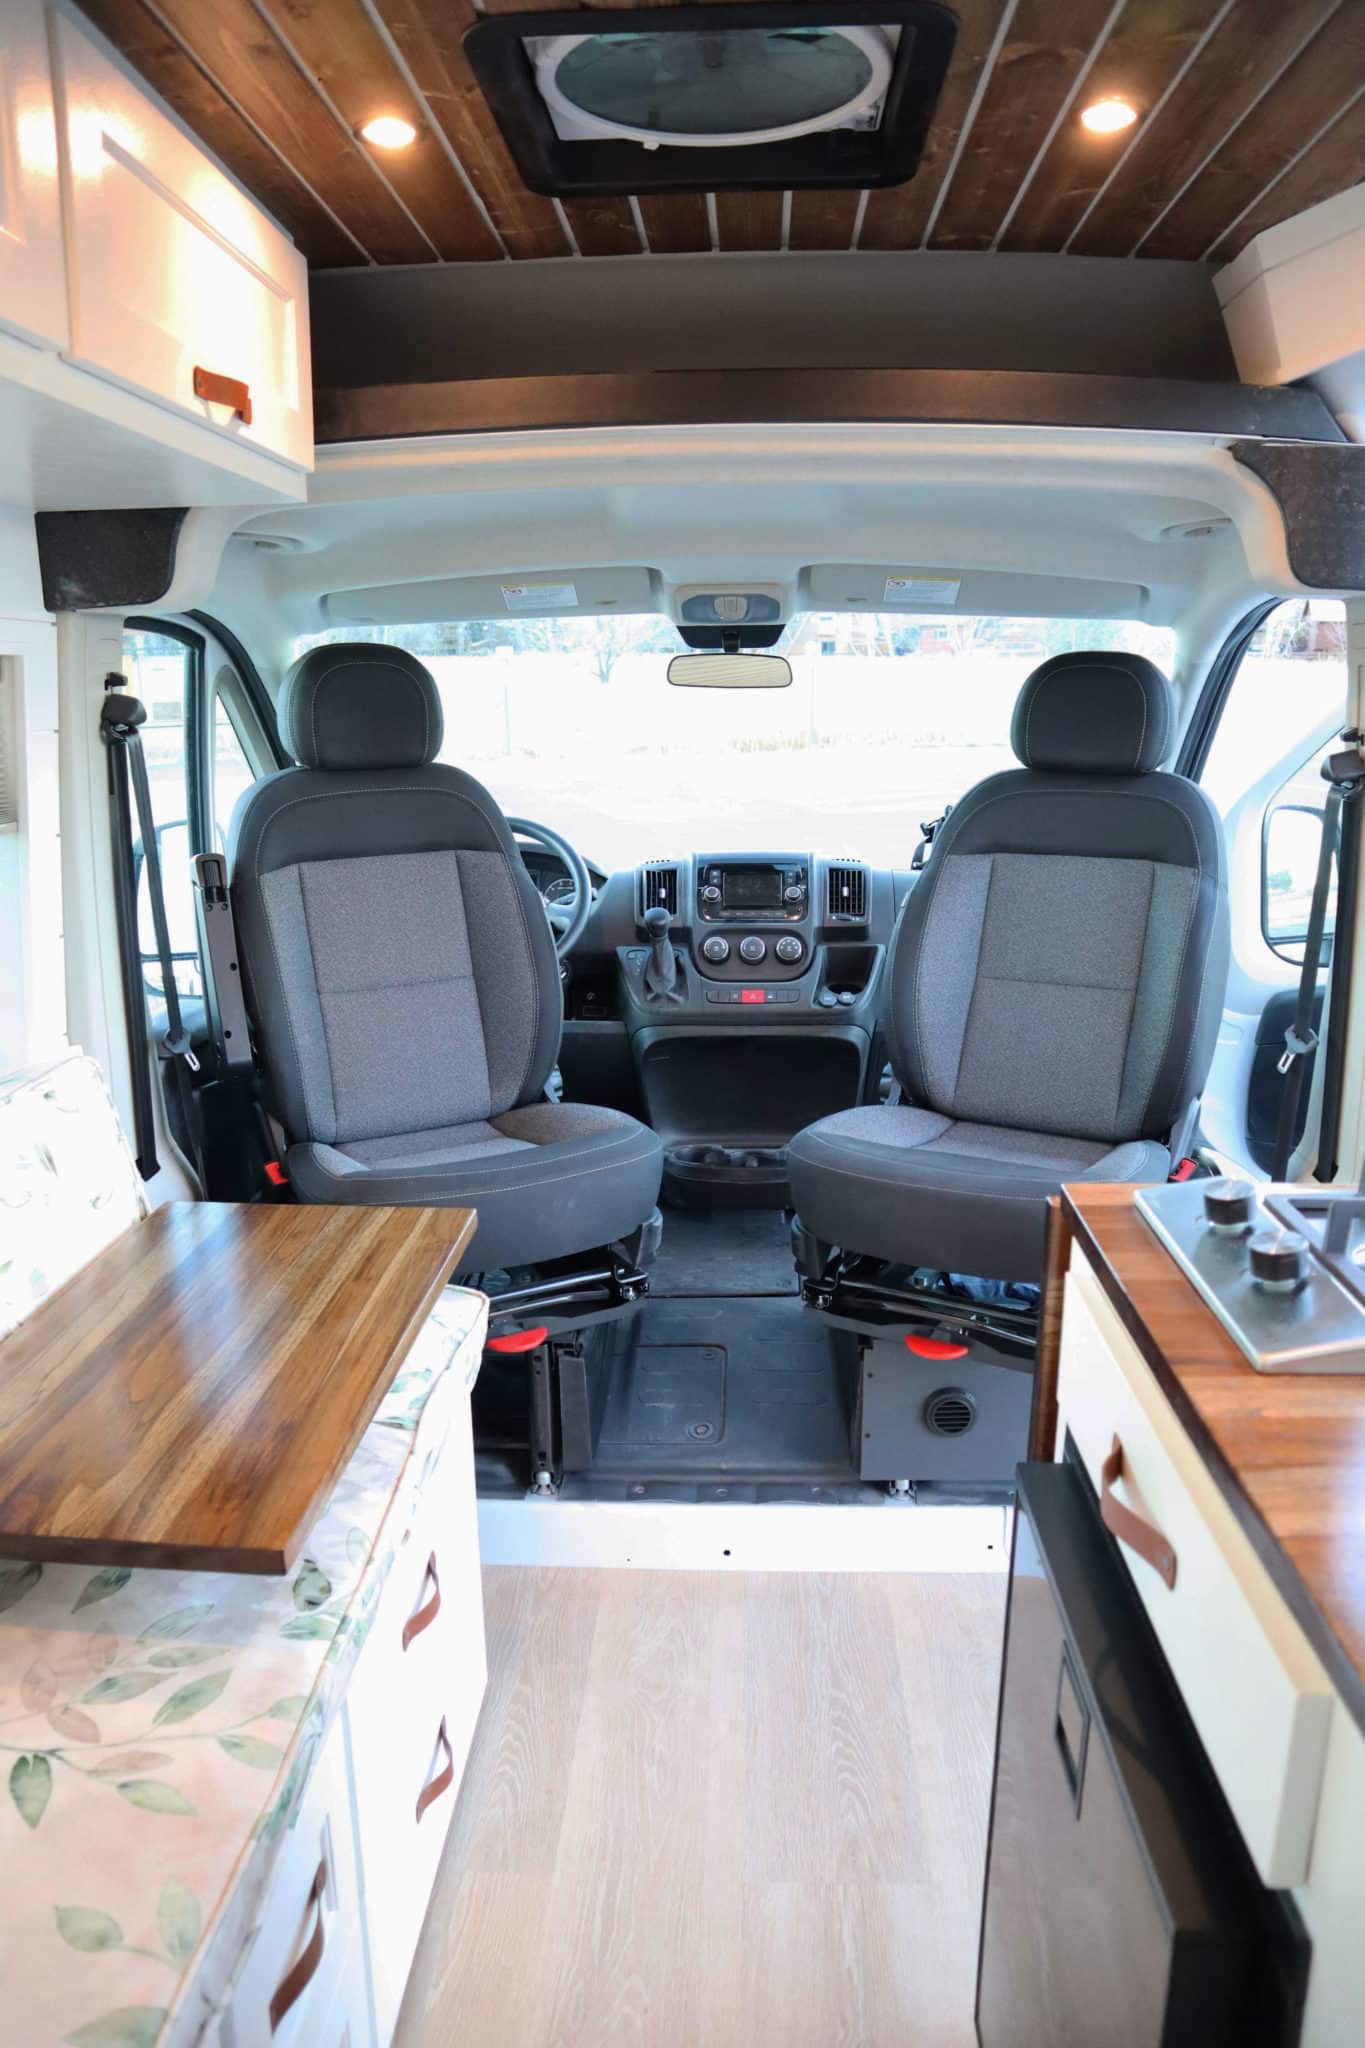 2021 Dodge Ram Camper Van For Sale in Denver, Colorado - Van Viewer